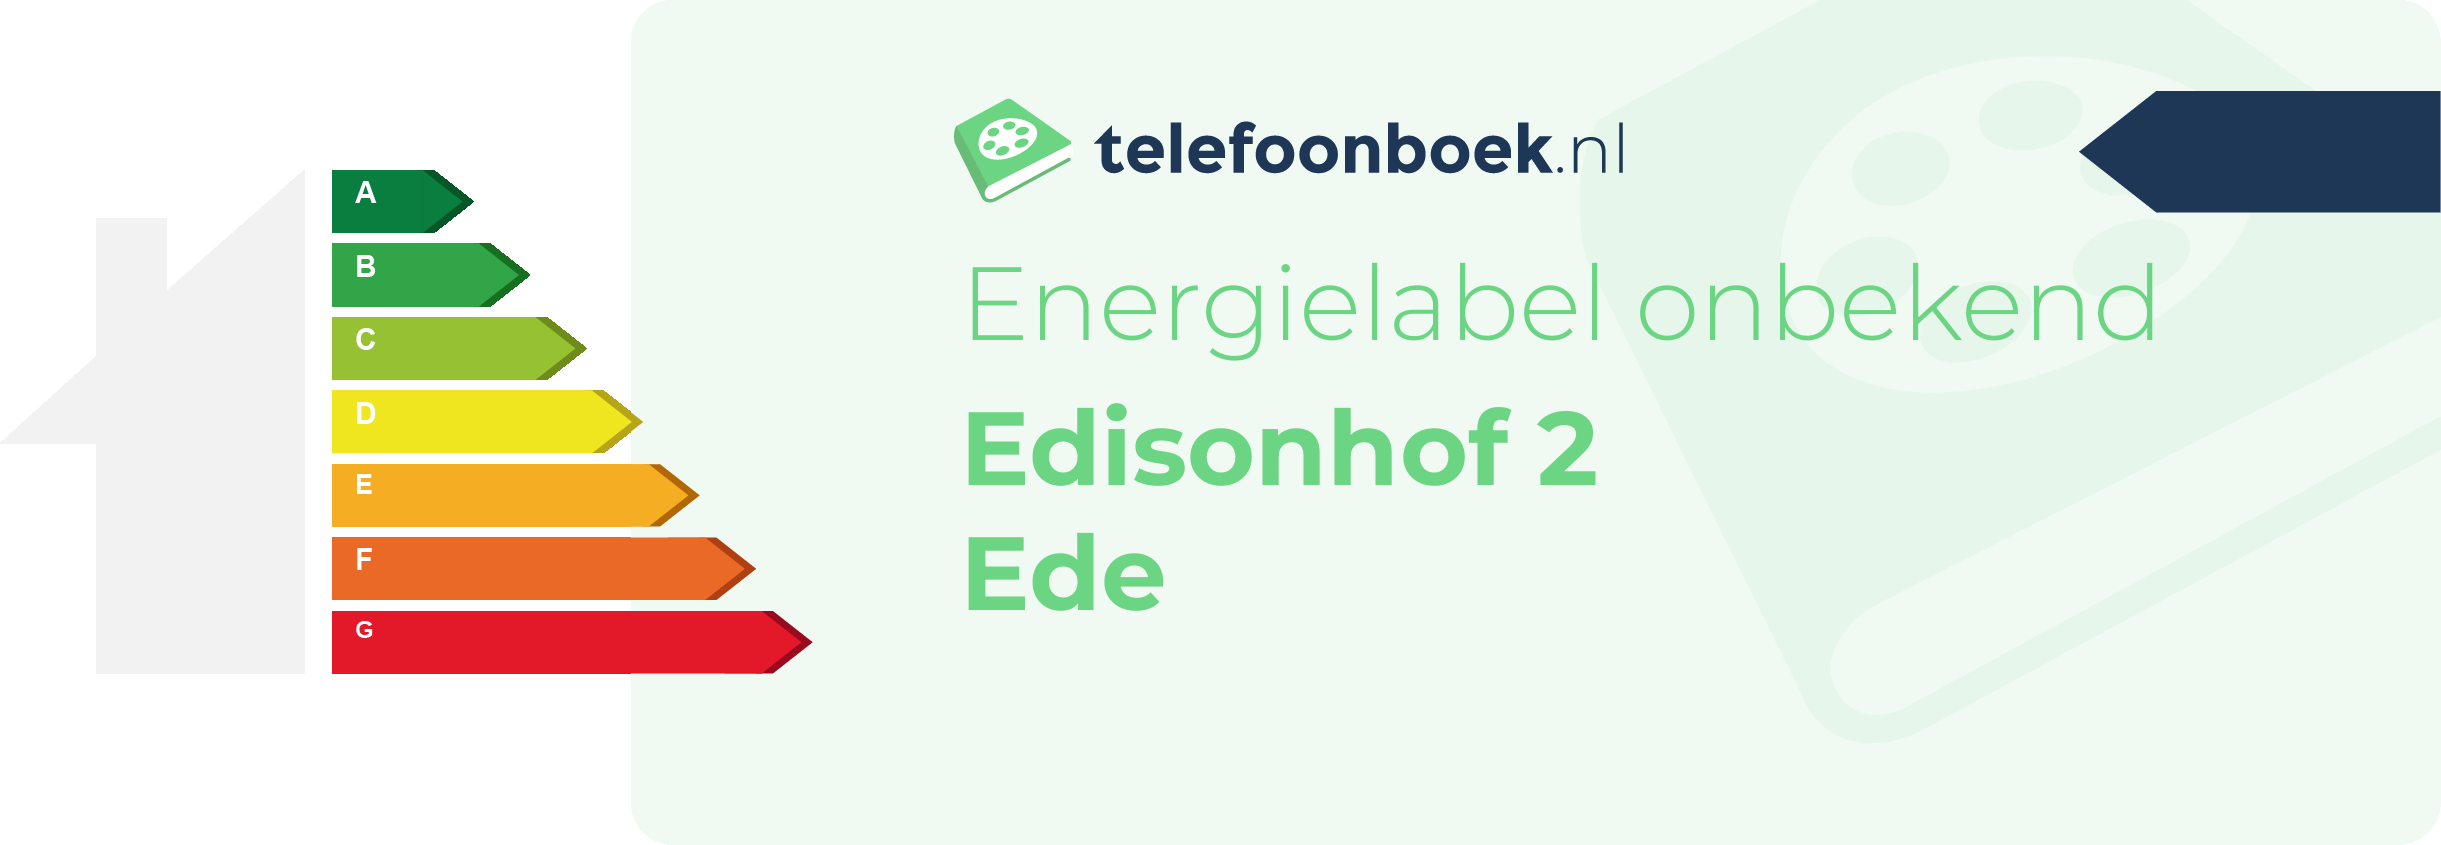 Energielabel Edisonhof 2 Ede